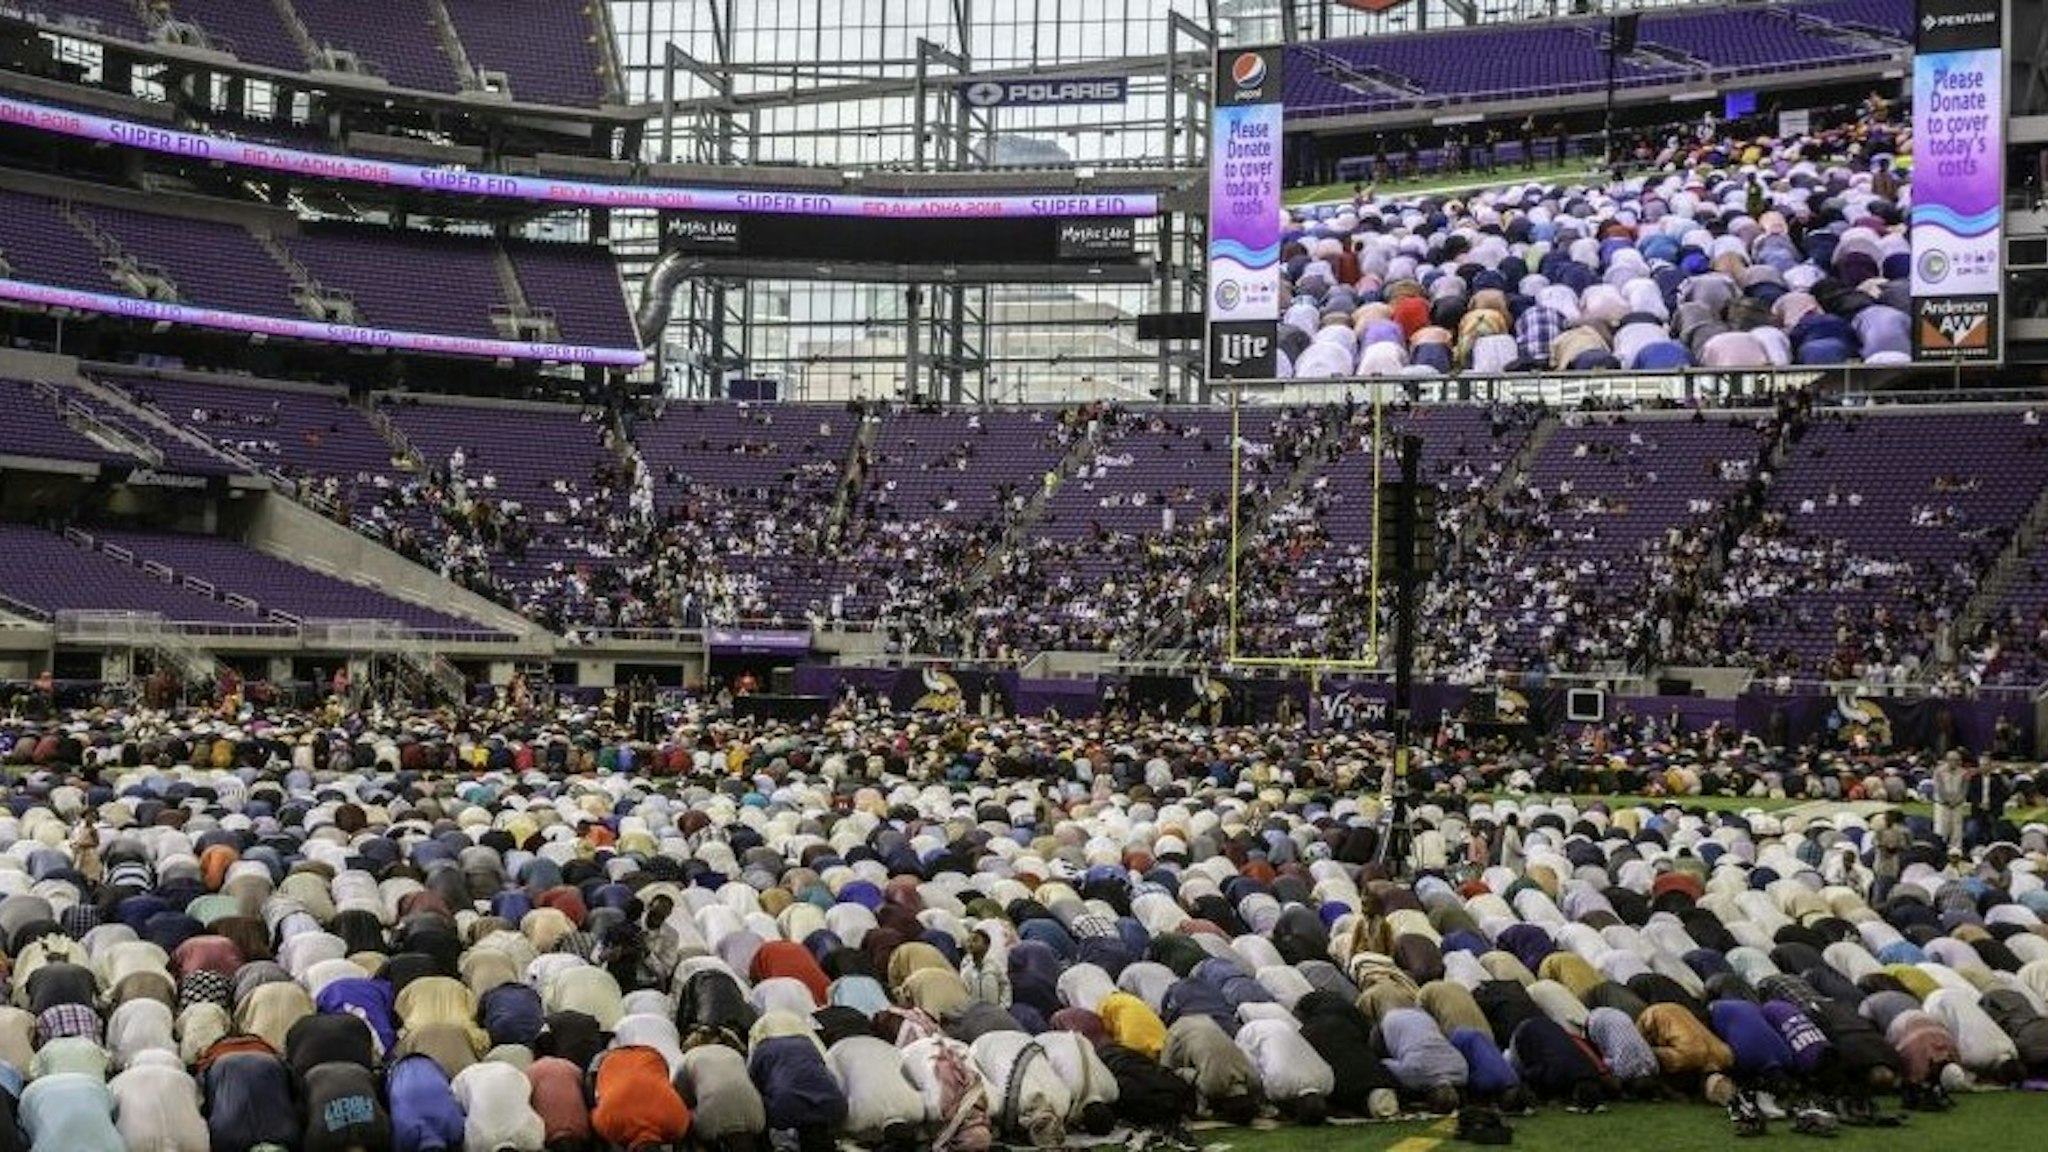 Muslim worshippers kneel in prayer at the US Bank Stadium during celebrations for Eid al-Adha on August 21, 2018 in Minneapolis, Minnesota.